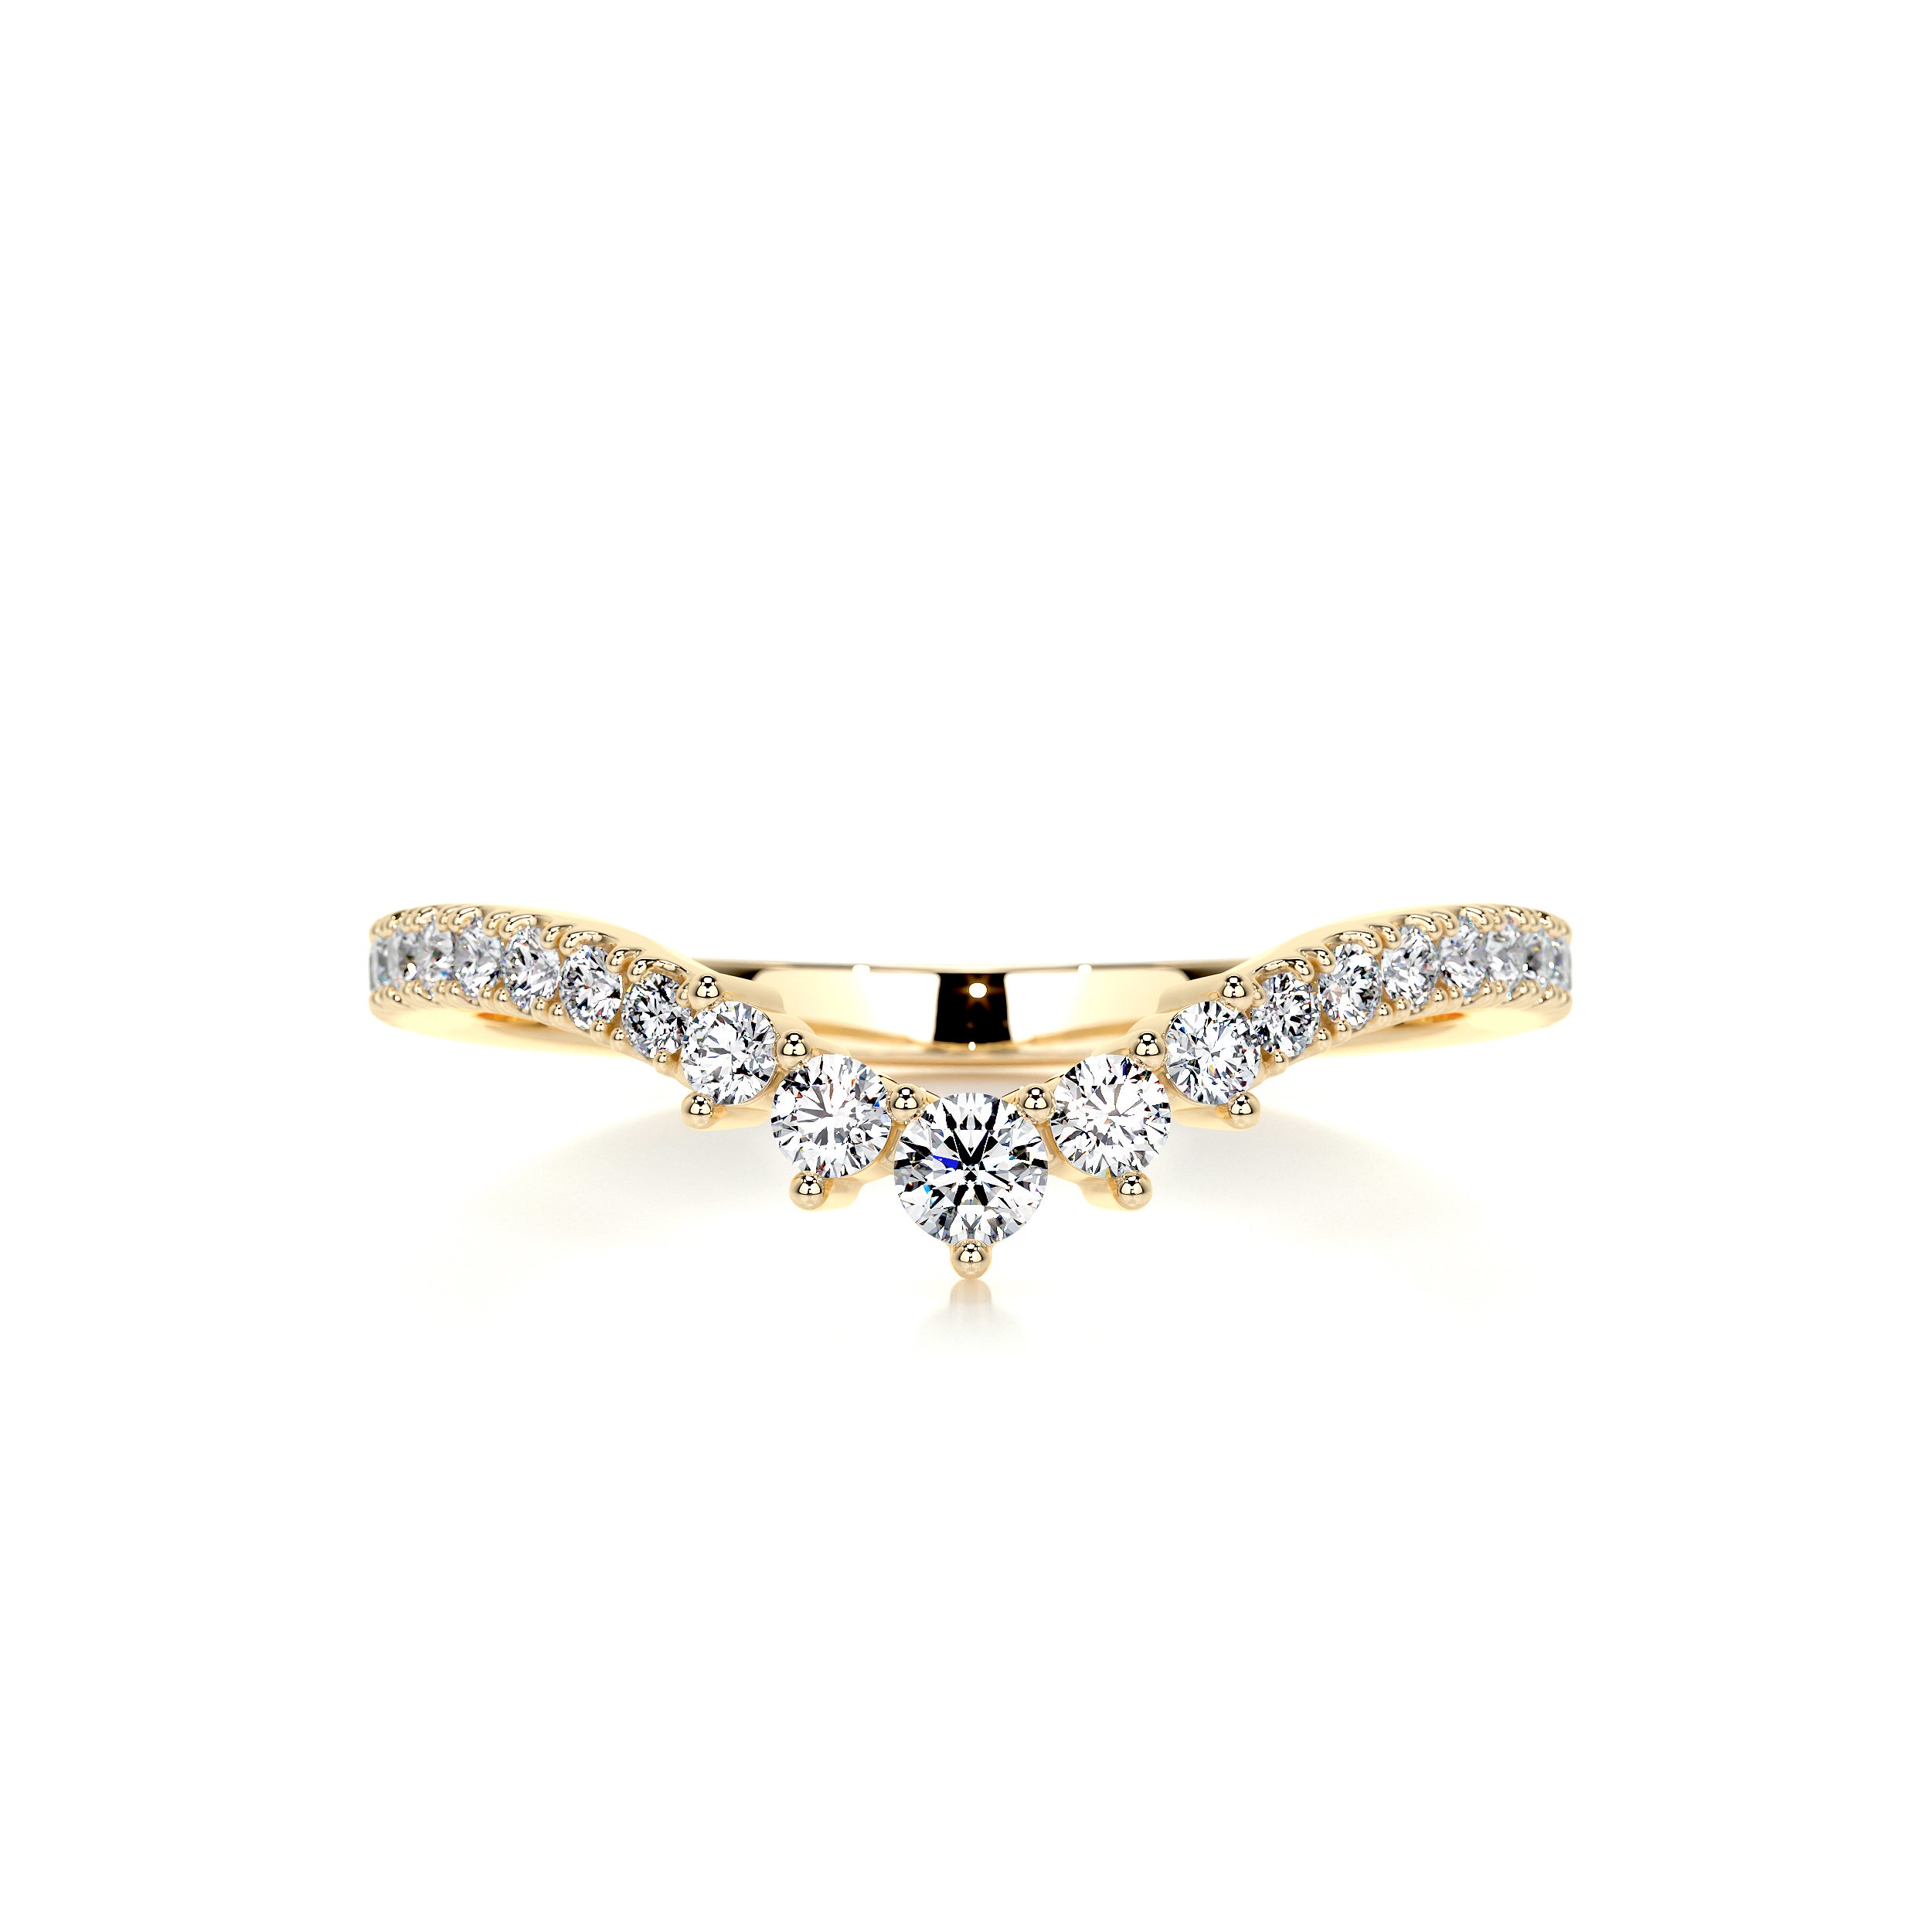 Mia Diamond Wedding Ring   (0.35 Carat) -18K Yellow Gold